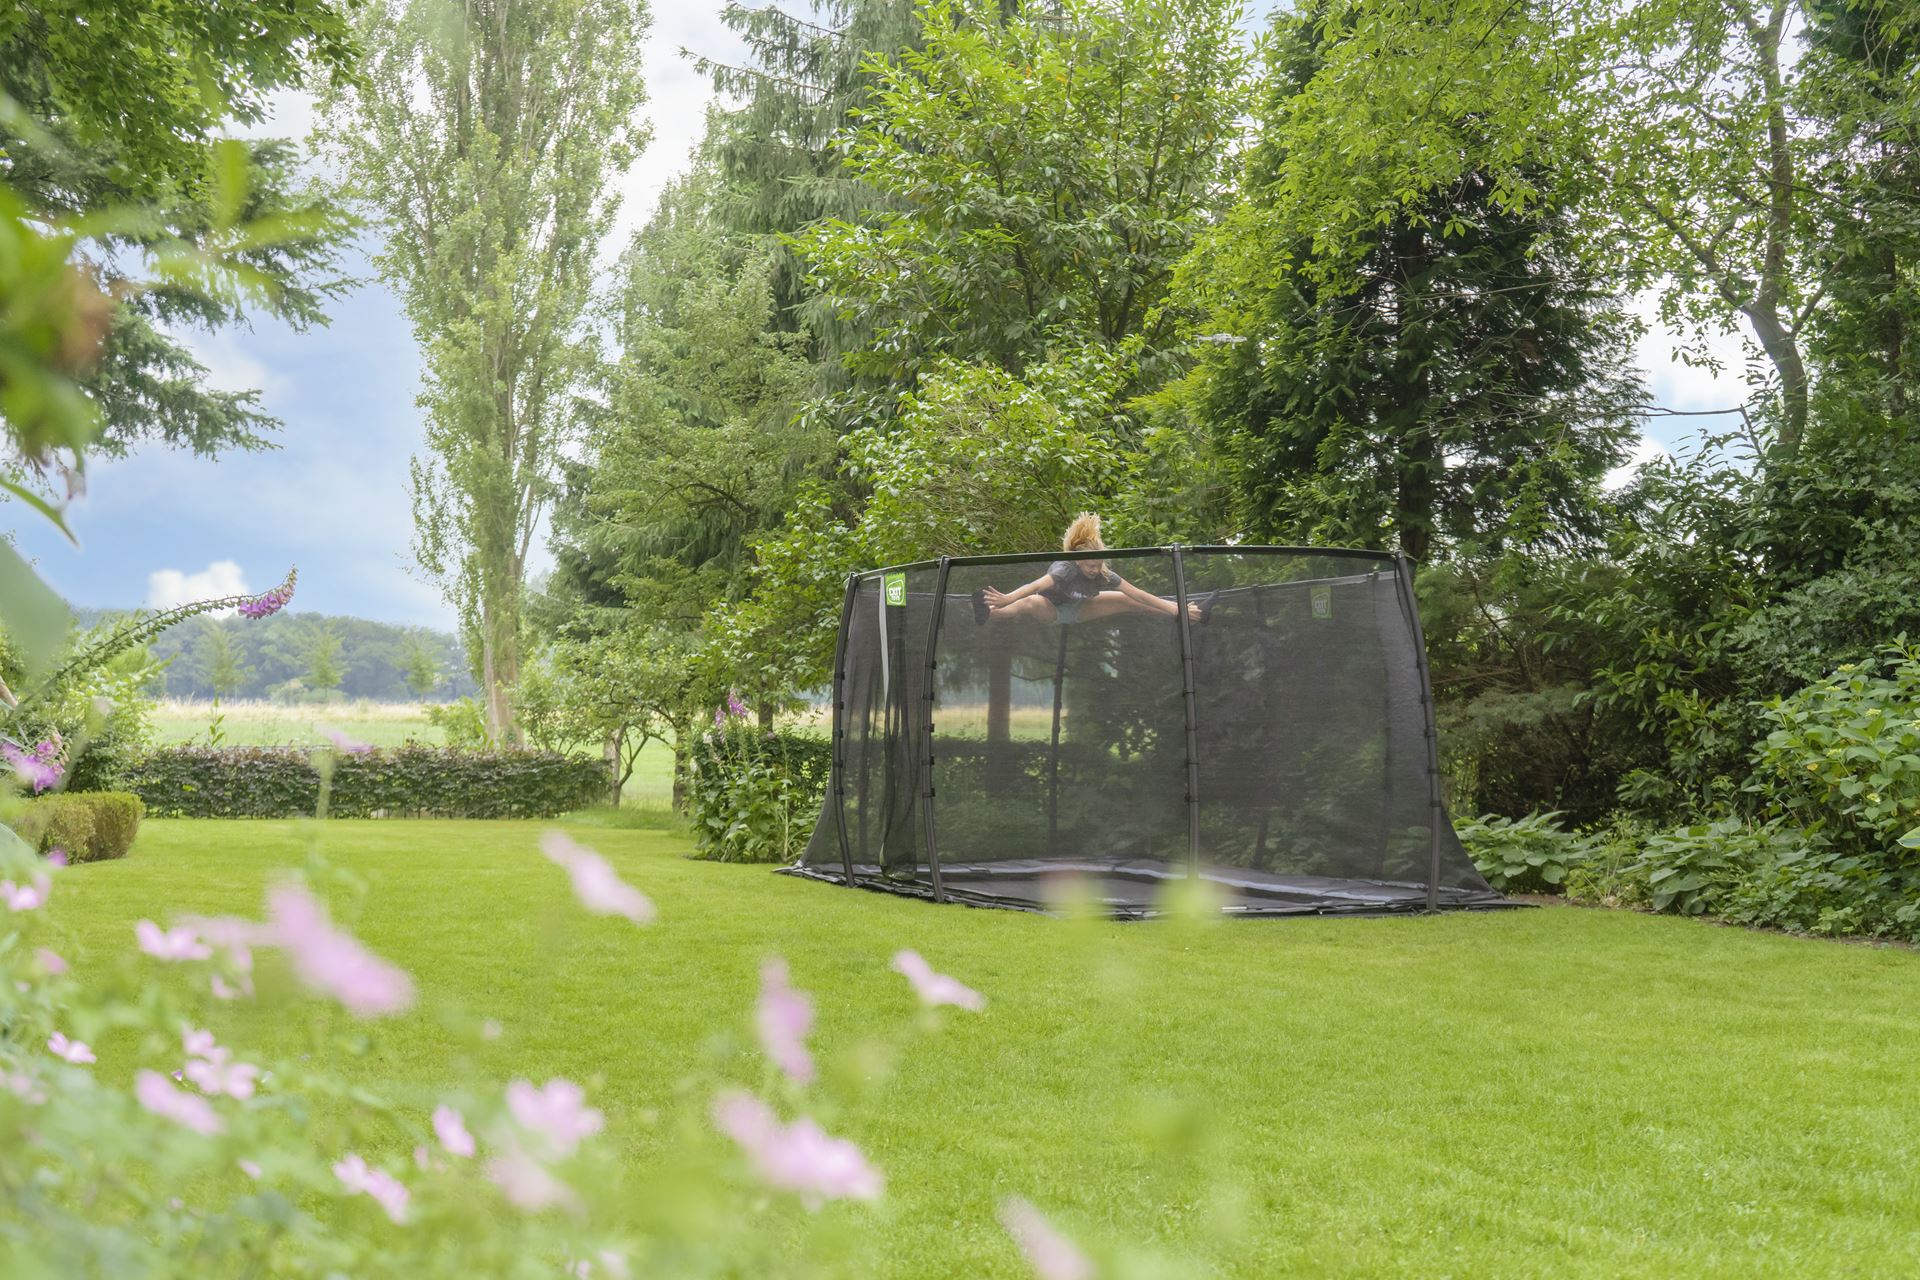 EXIT-Dynamic-groundlevel-trampoline-244x427cm-met-veiligheidsnet-zwart